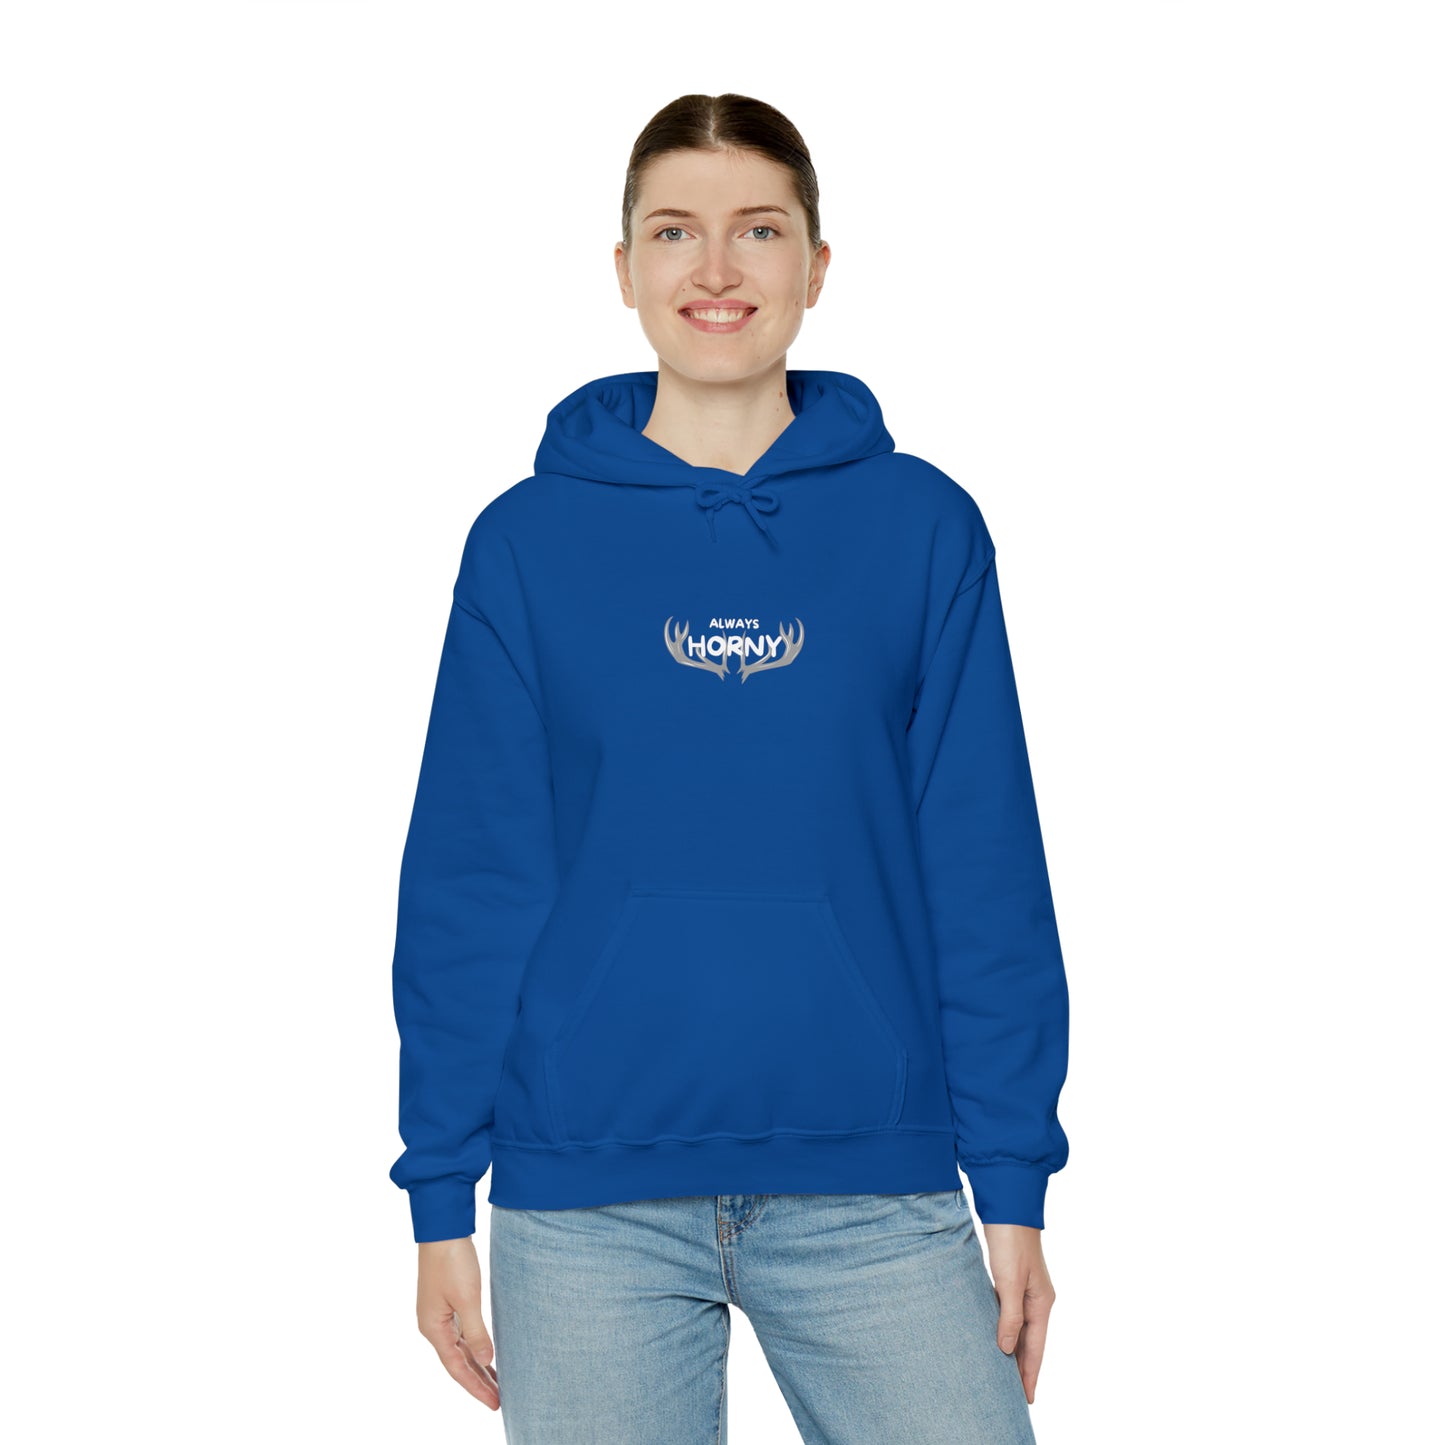 Always Horny - Unisex Heavy Blend™ Hooded Sweatshirt